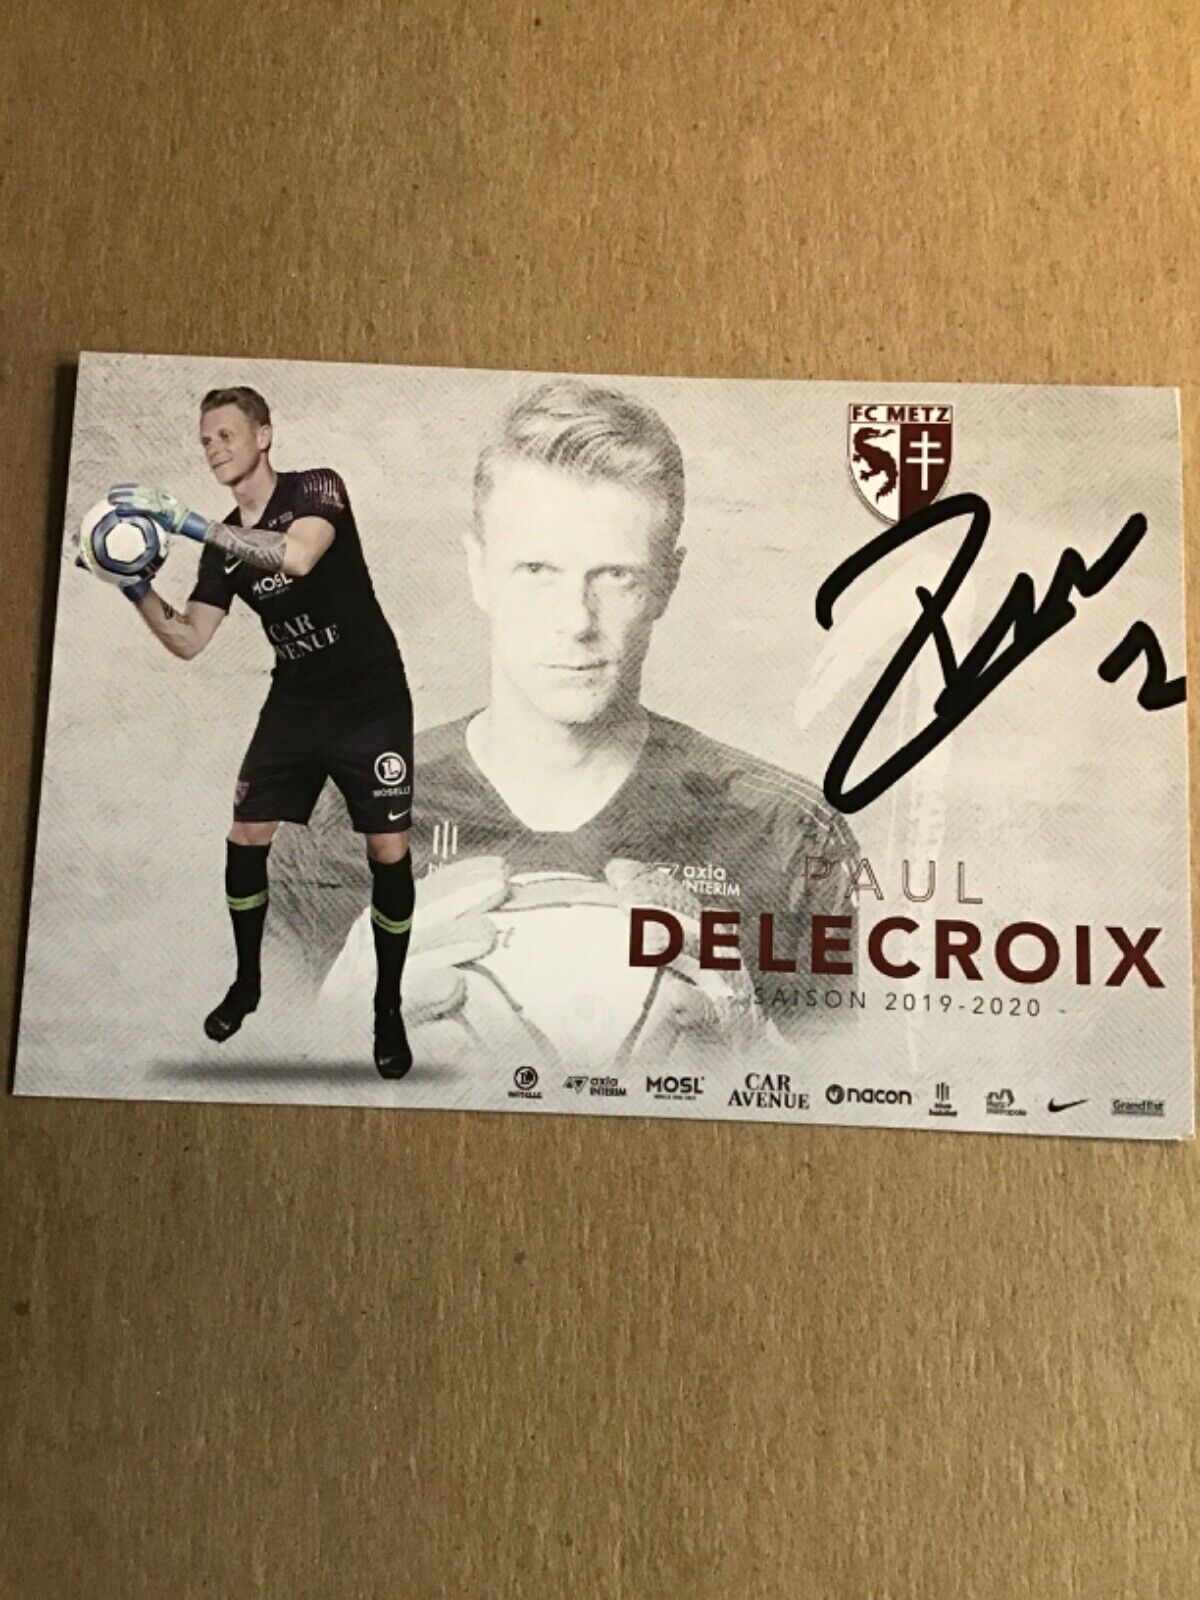 Paul Delecroix, France 🇫🇷 FC Metz 2019/20 hand signed